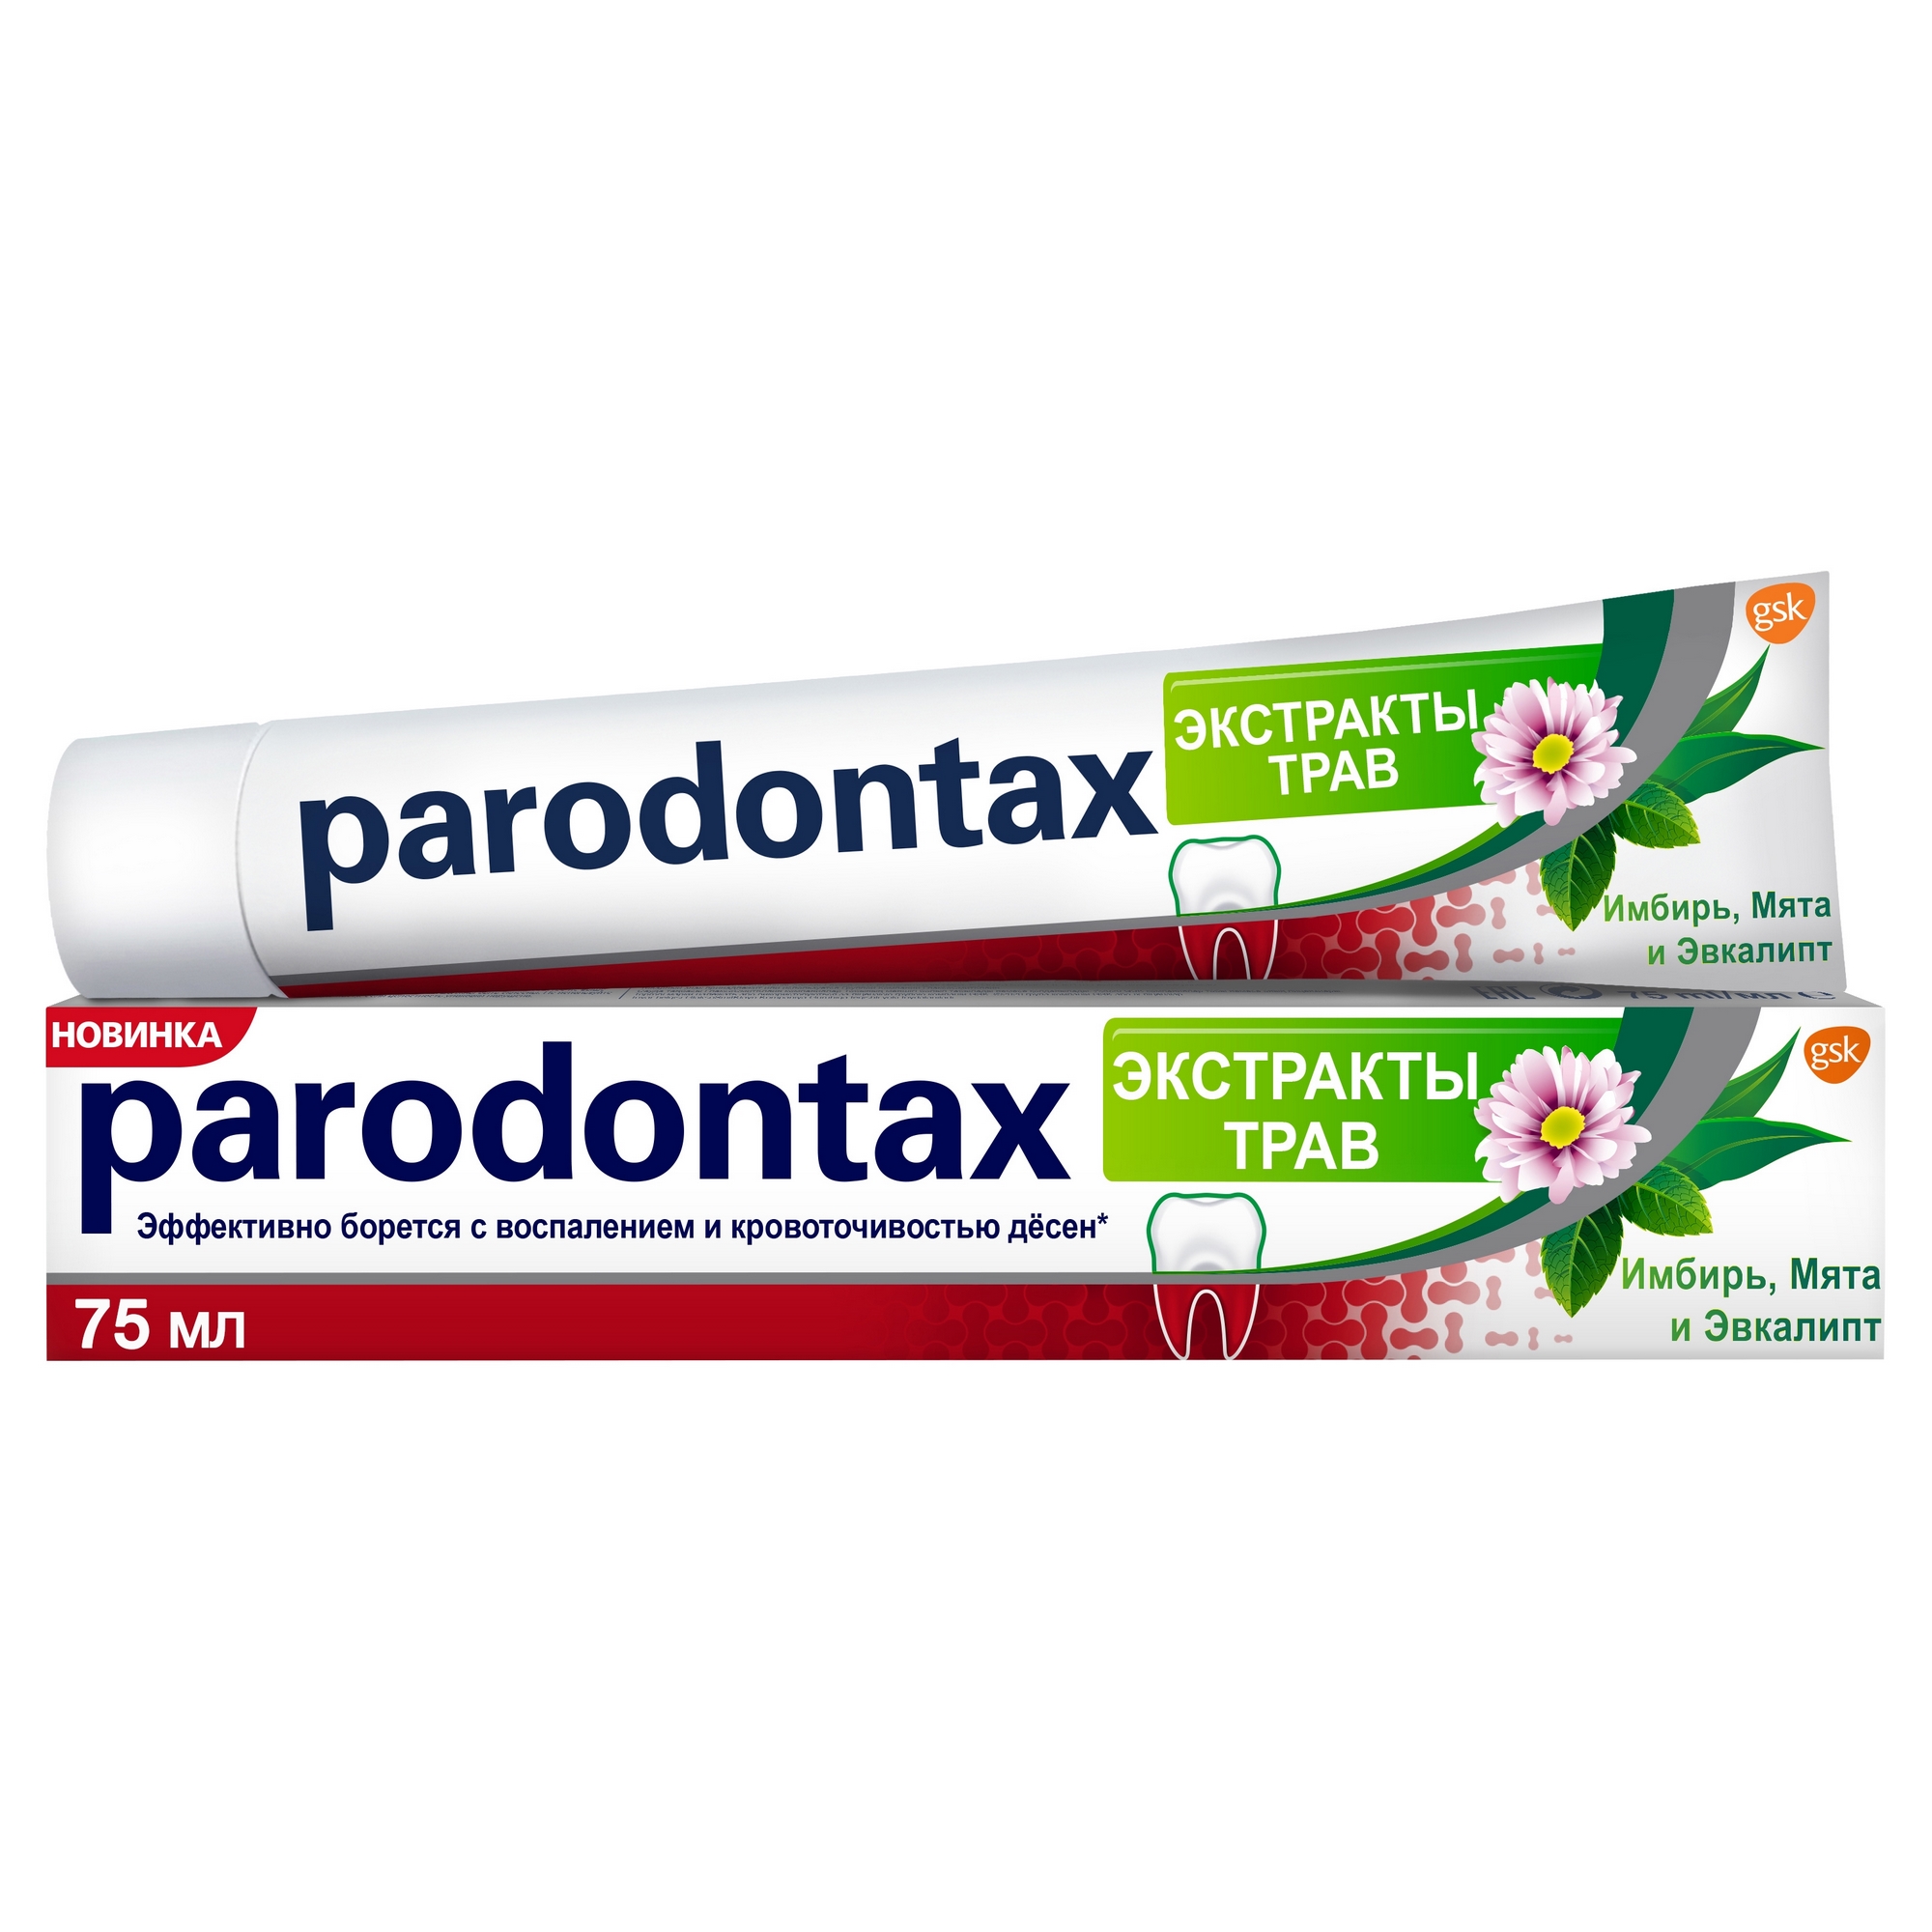 Зубная паста Parodontax Экстракты трав 75 мл